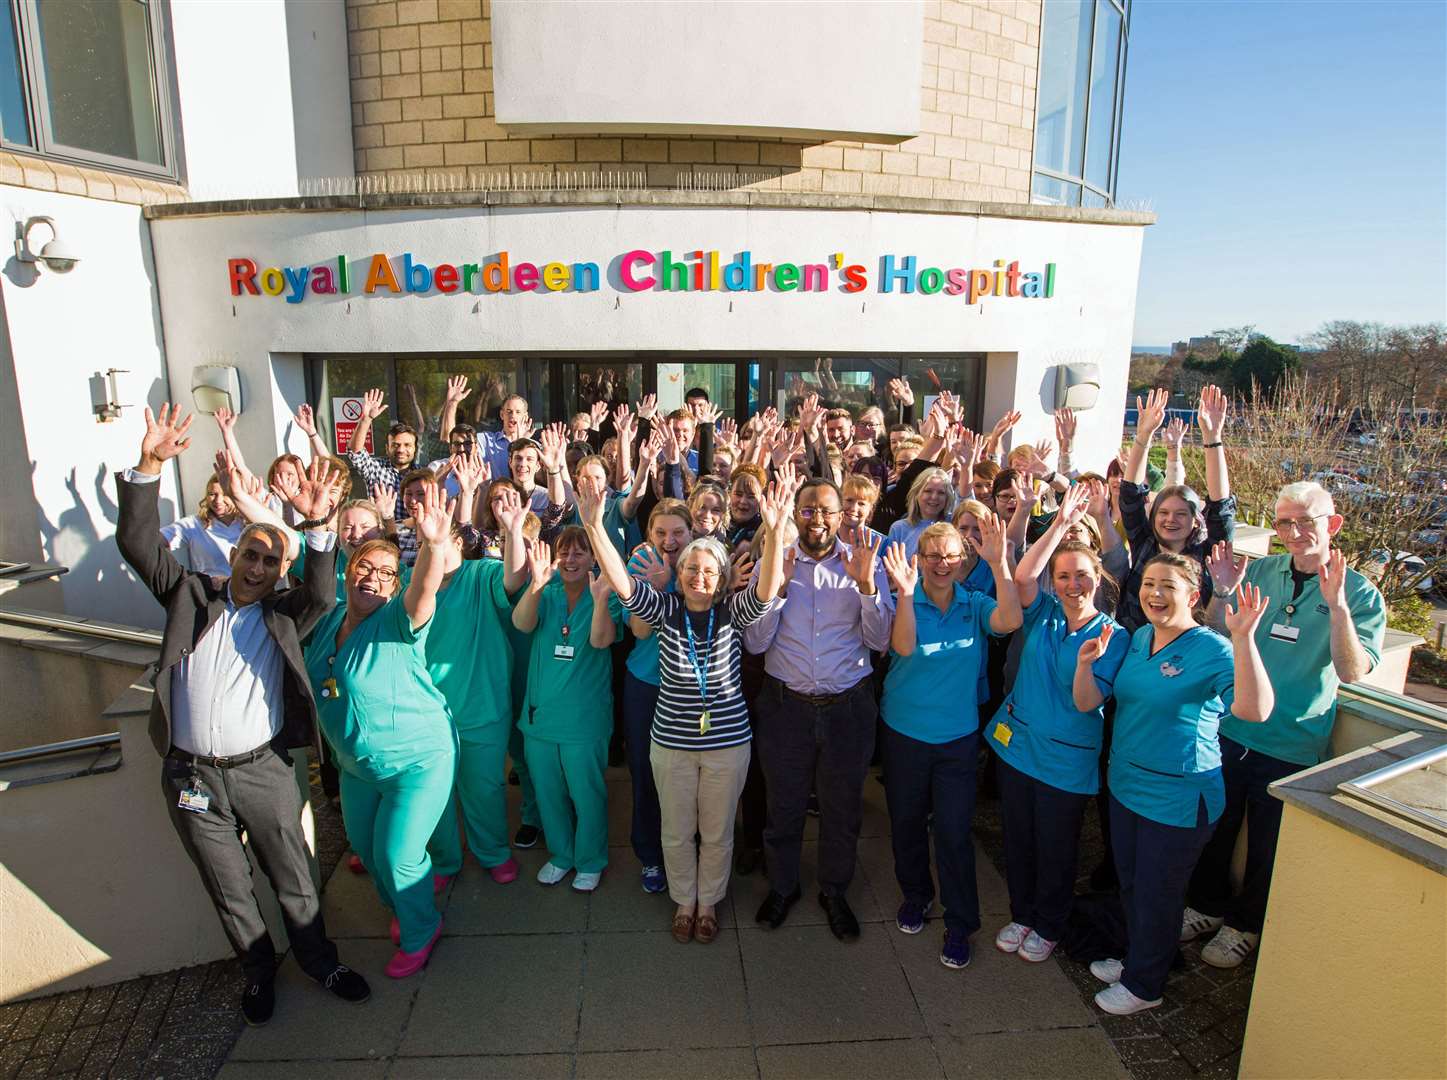 Staff at the Royal Aberdeen Children’s Hospital.